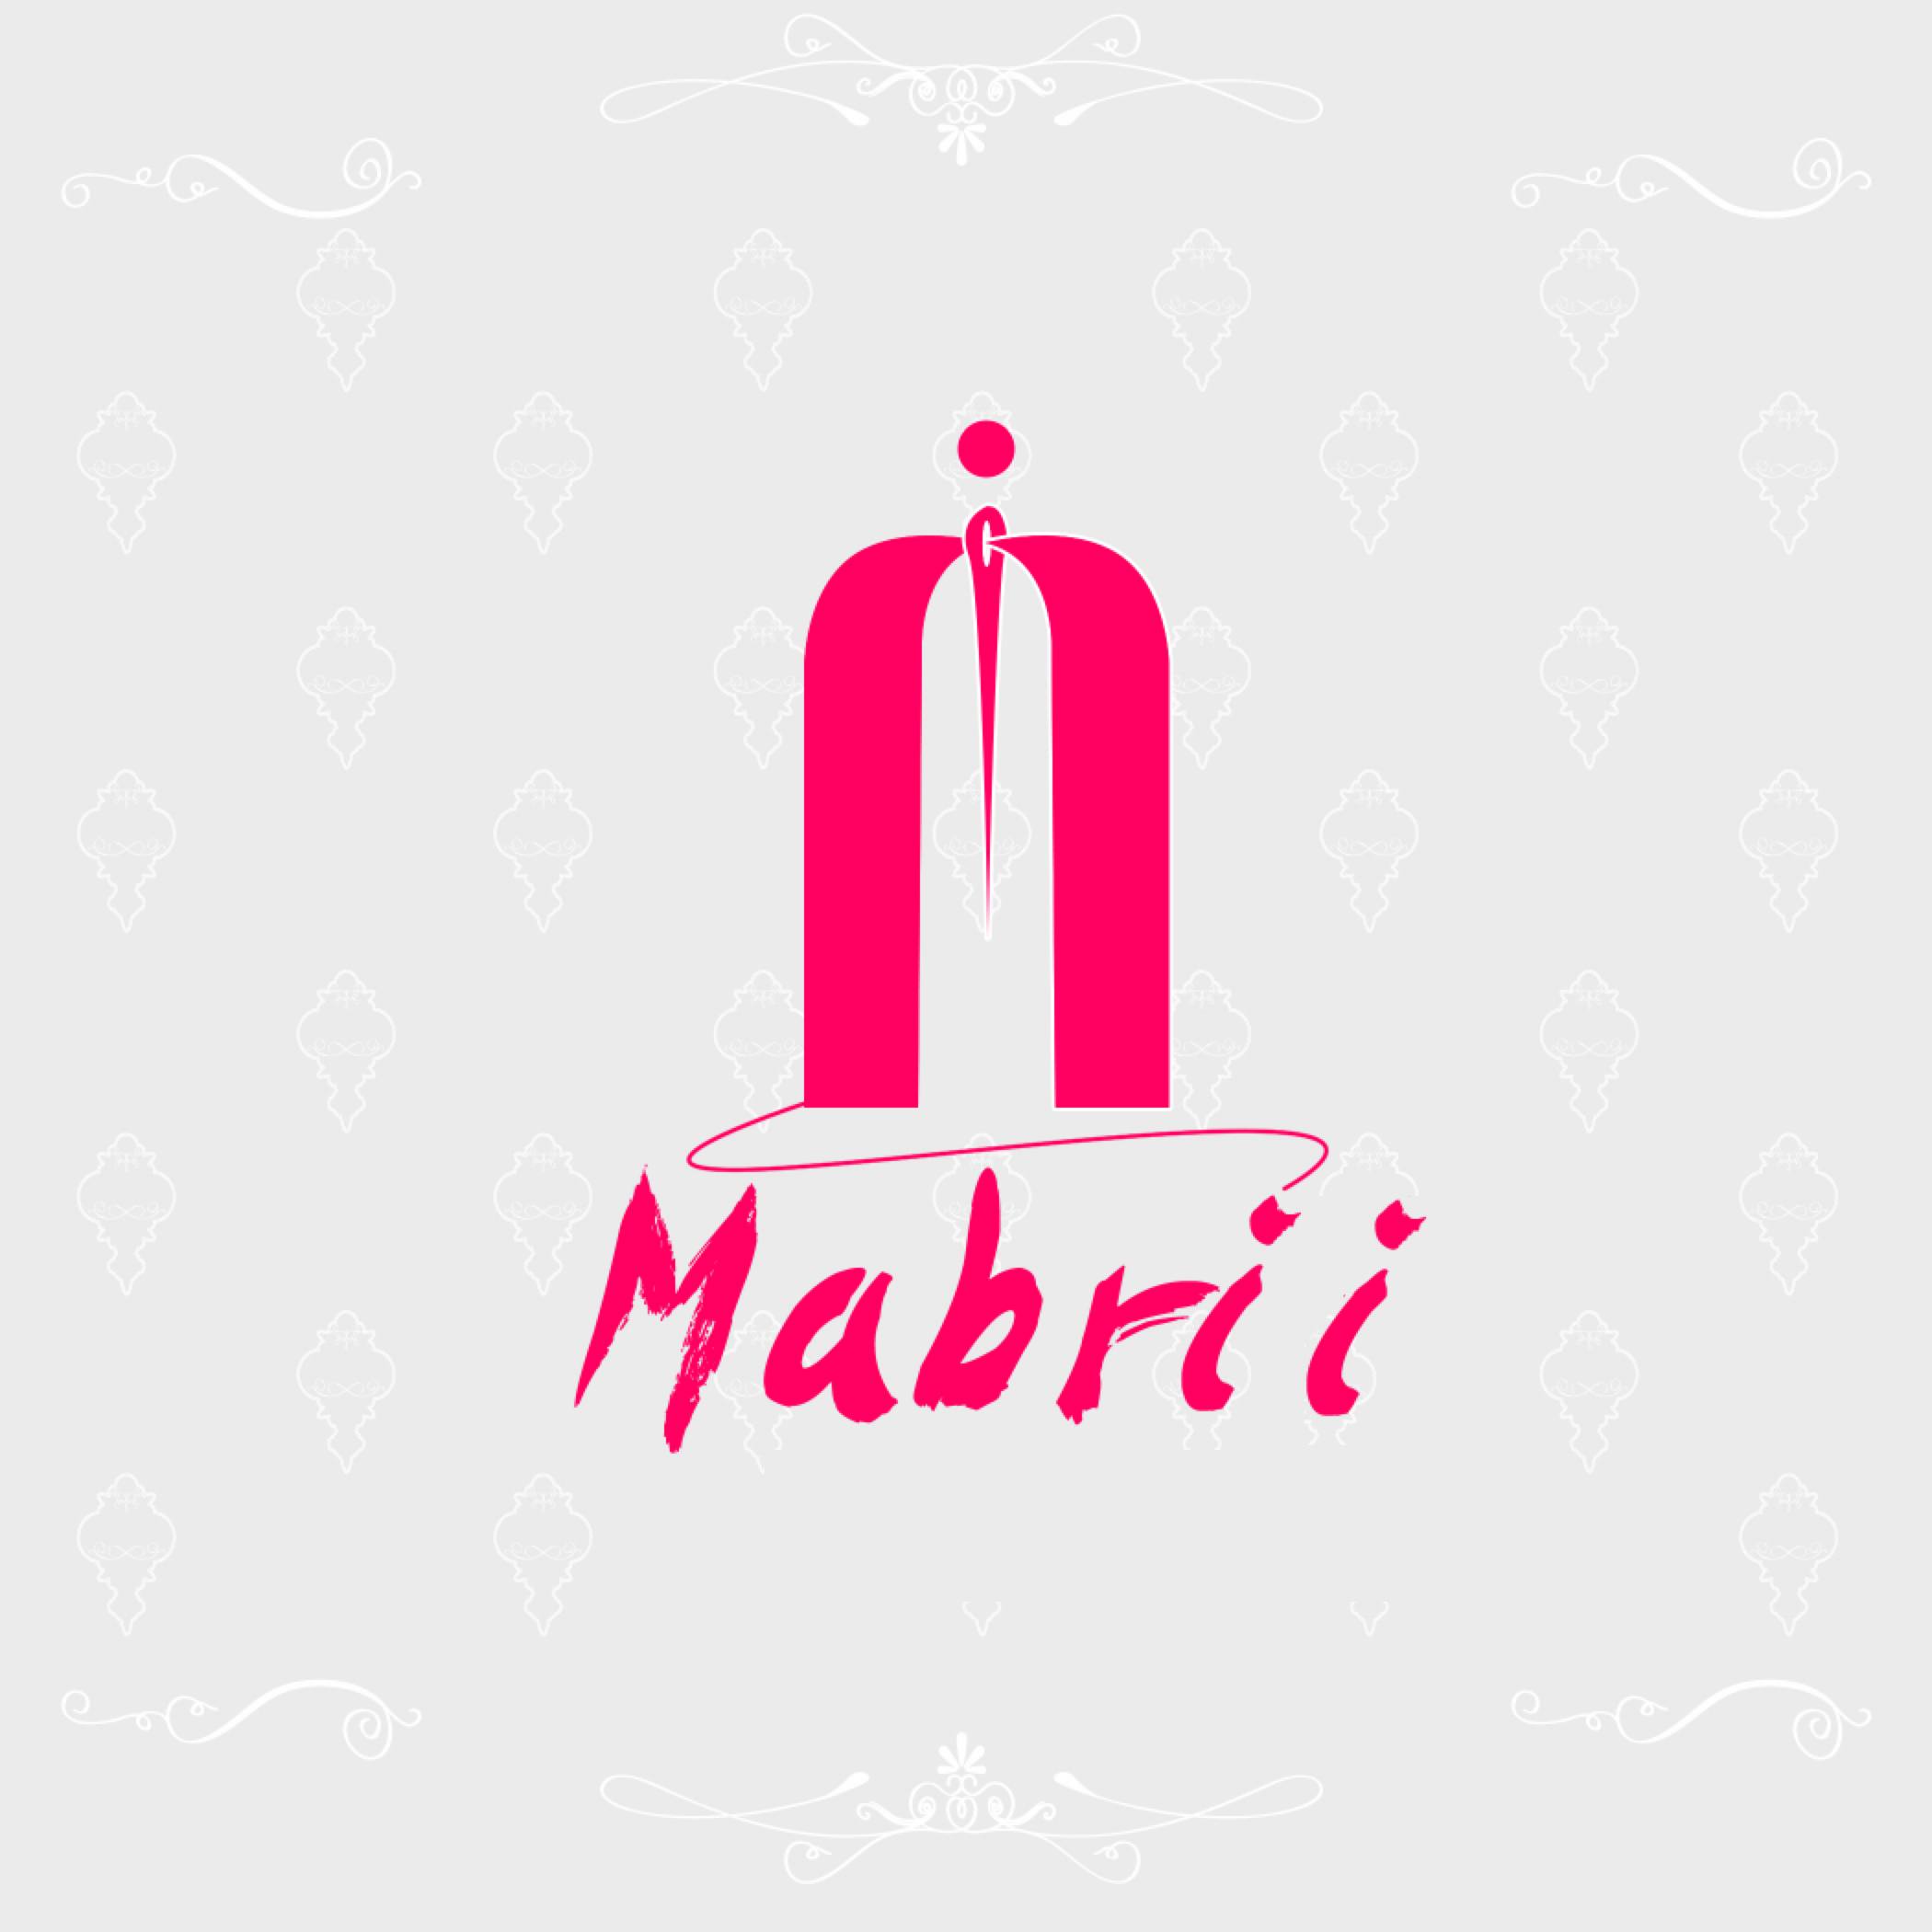 Mabrii – Mabriifashion